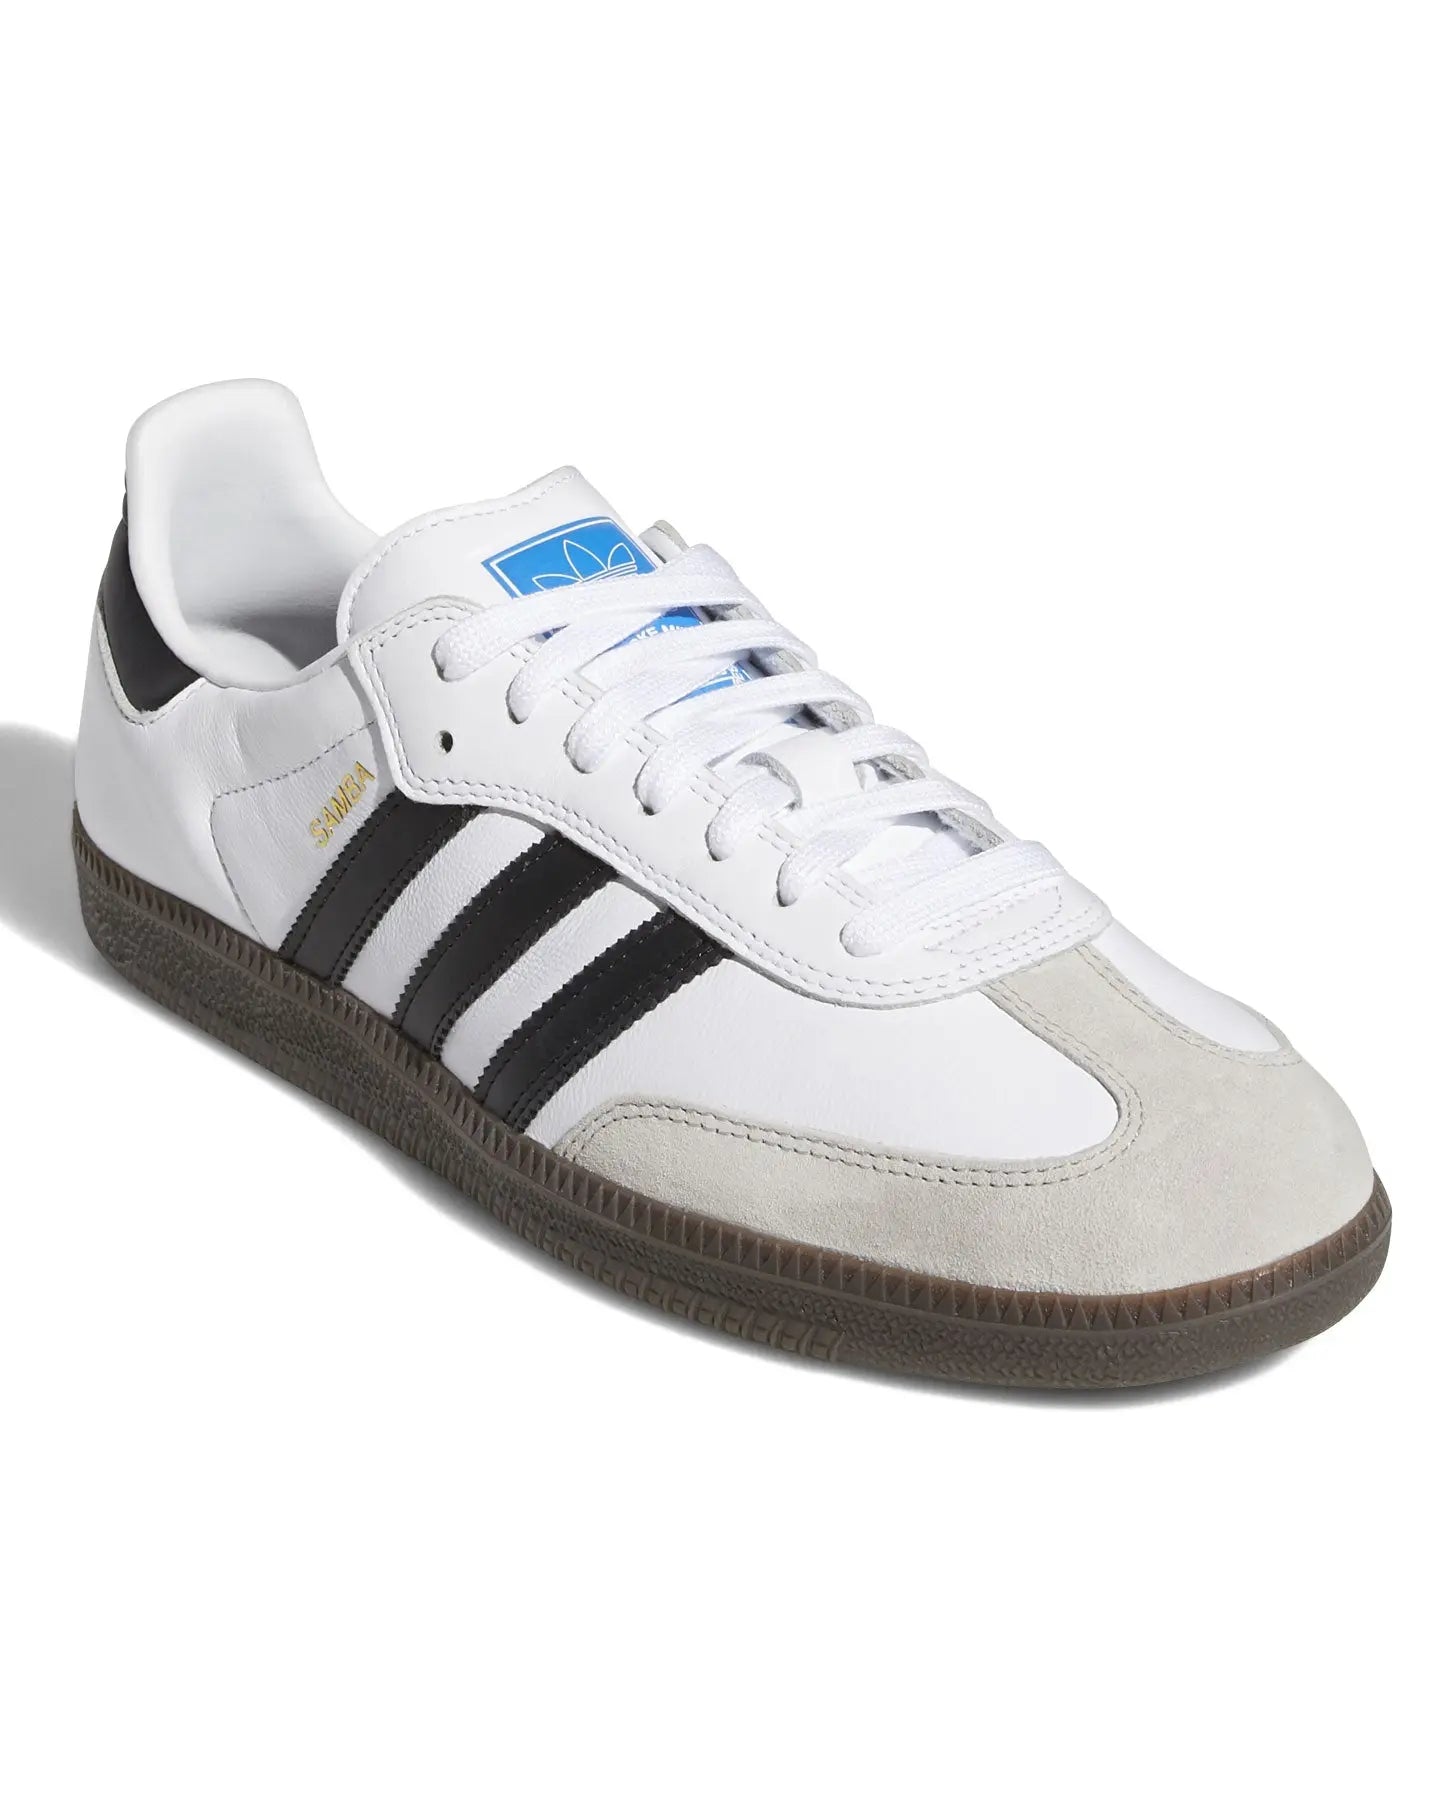 Adidas Samba ADV - White / Black / Gum Footwear